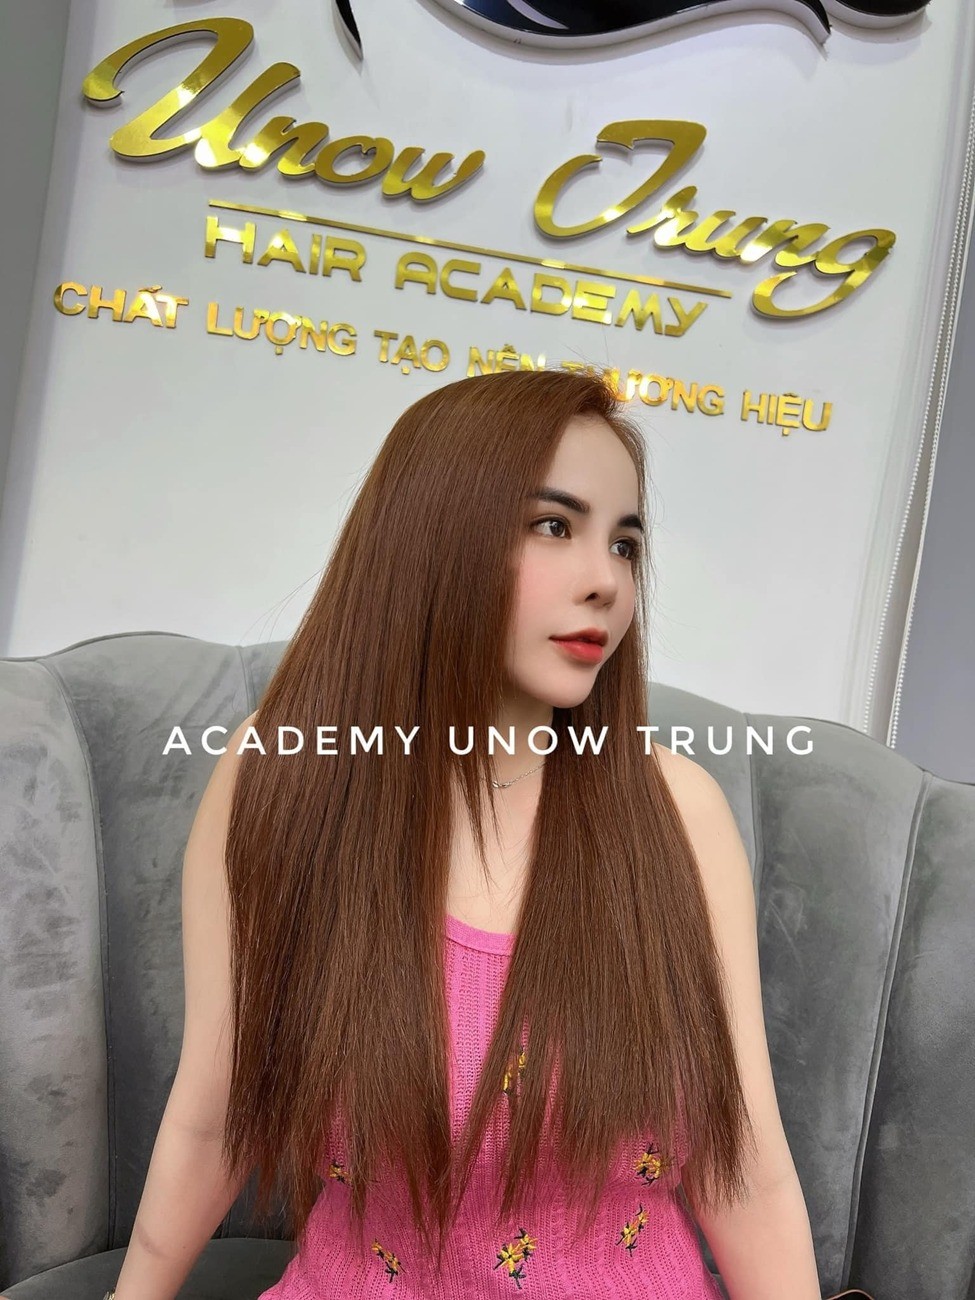 academy-unow-trung-hair-salon-6-1715386272.jpg